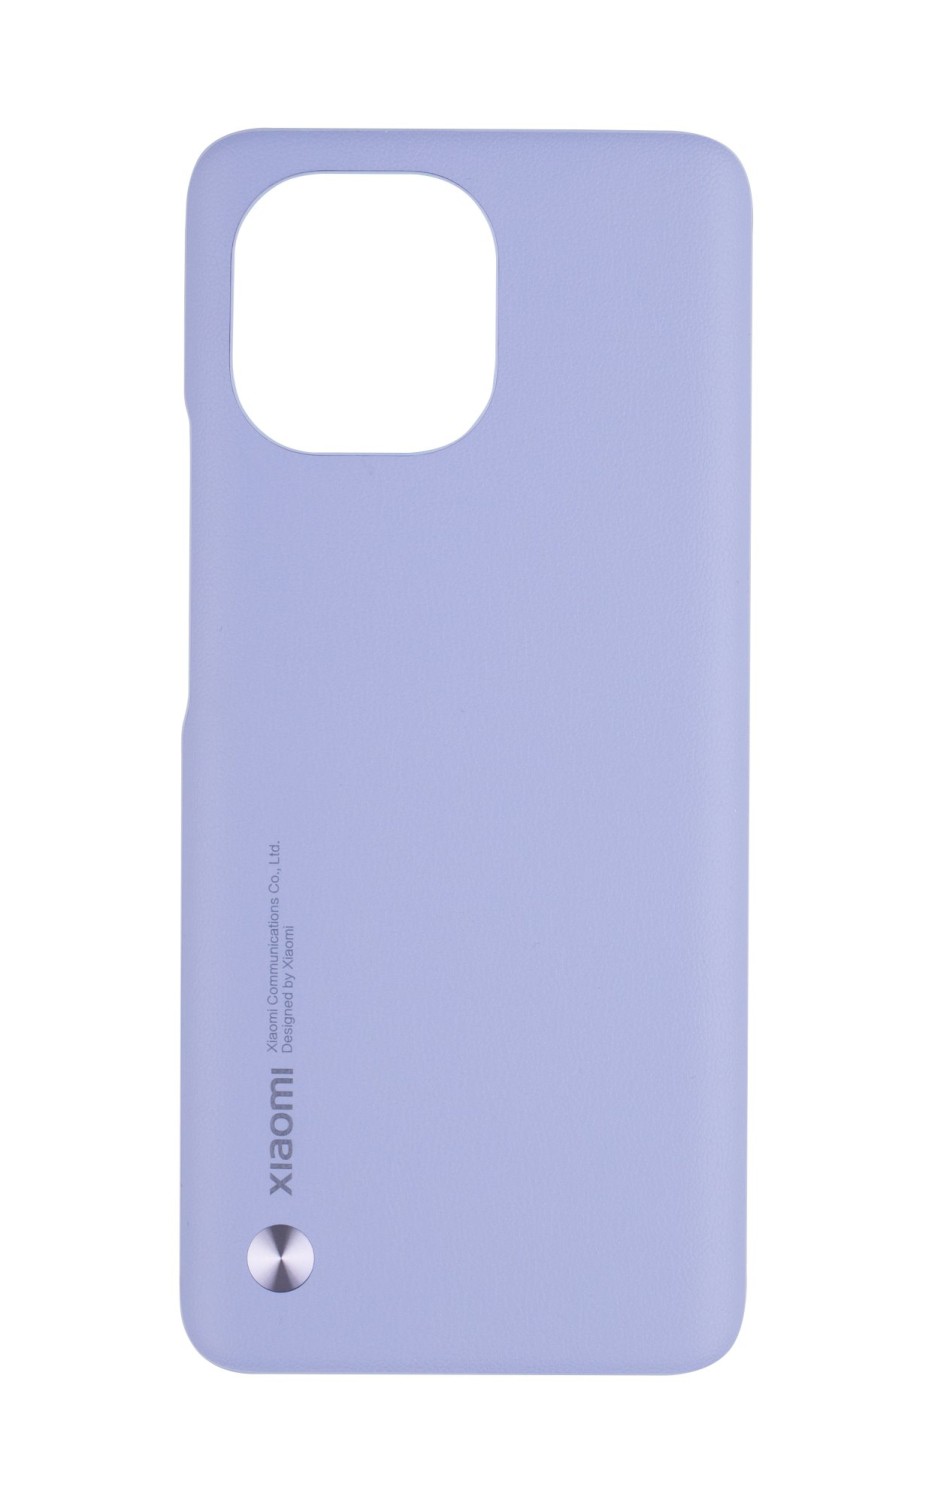 Xiaomi Mi 11 Kryt Baterie Purple